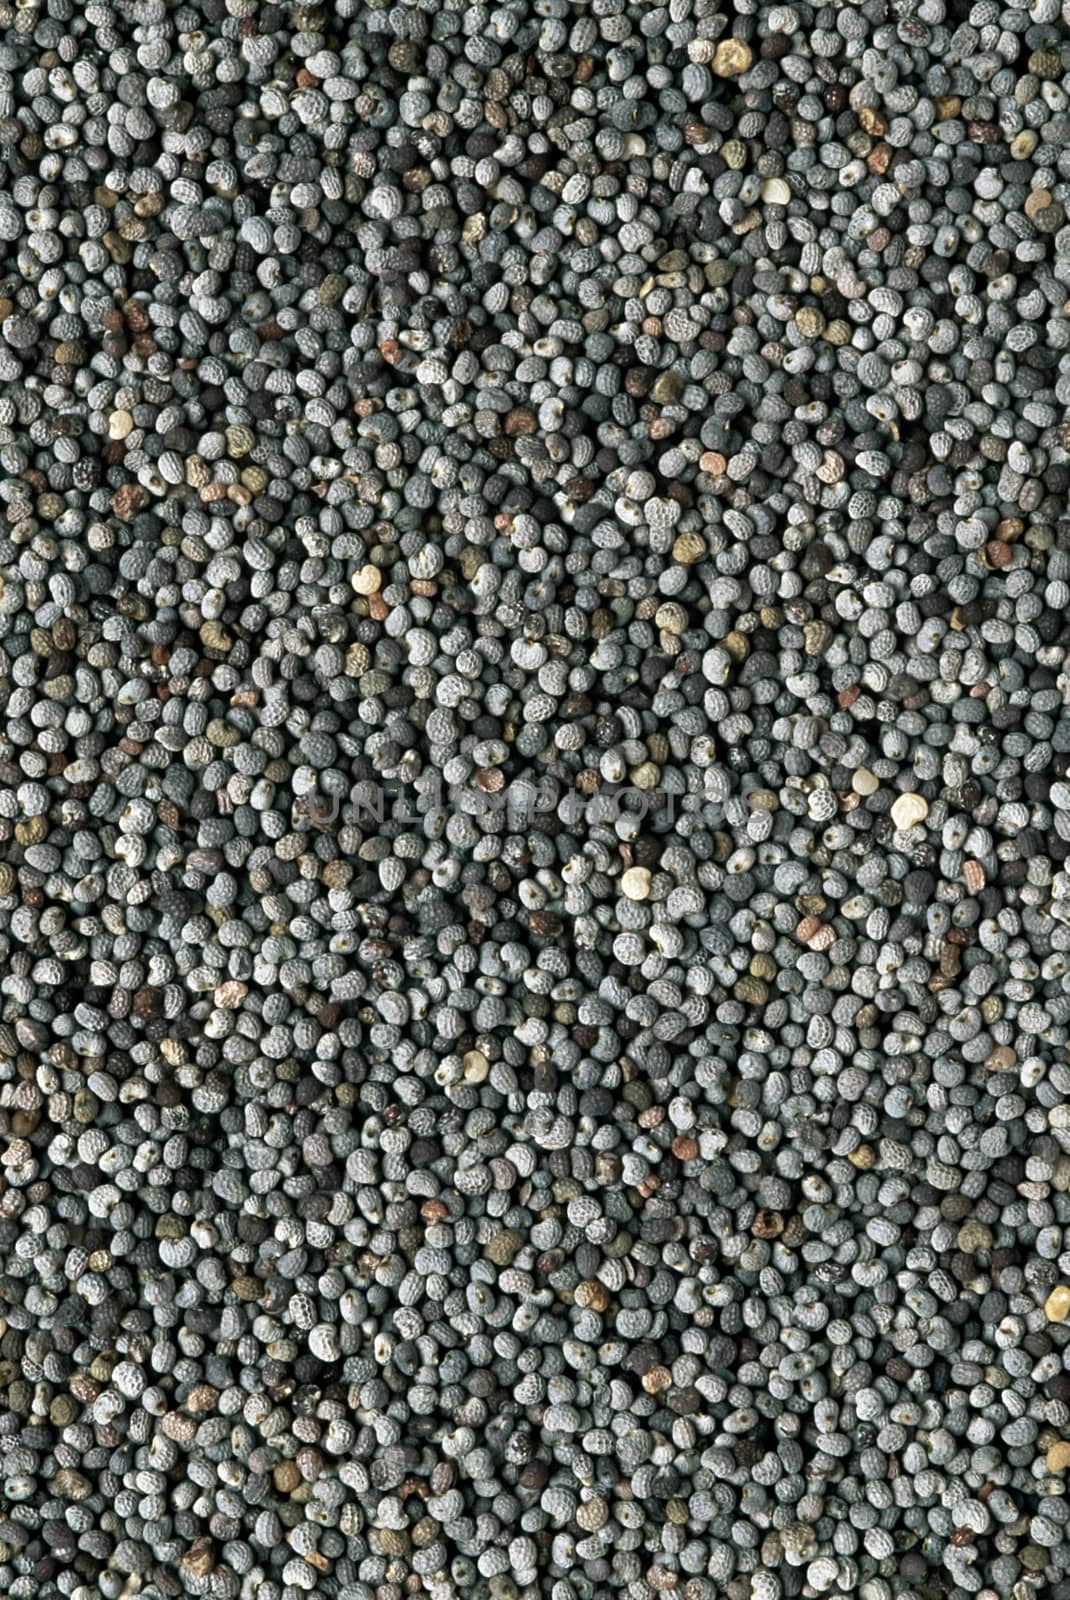 Poppy seeds by shutswis